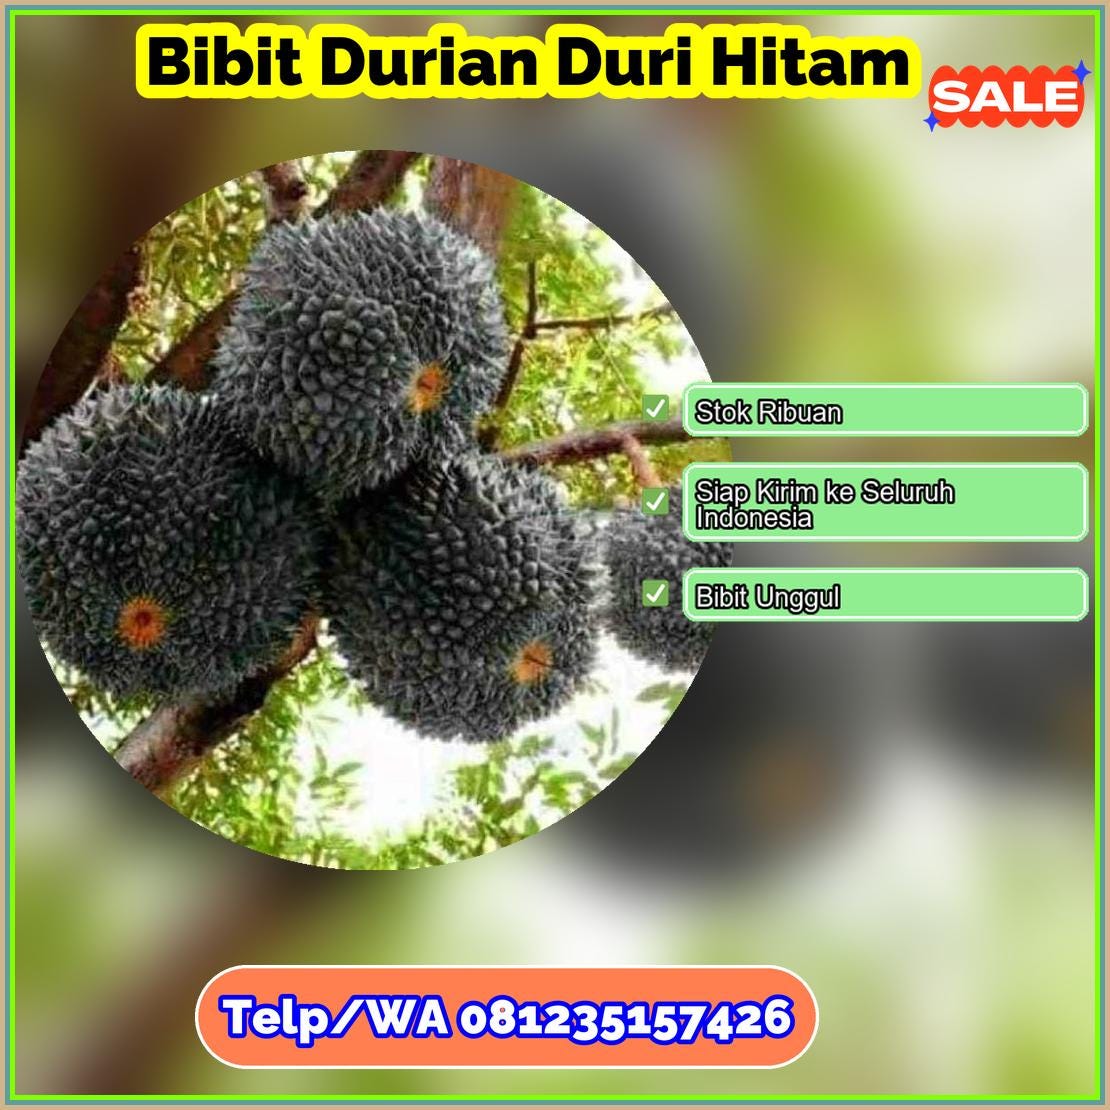 Grosir Bibit Durian Duri Hitam Banyuwangi